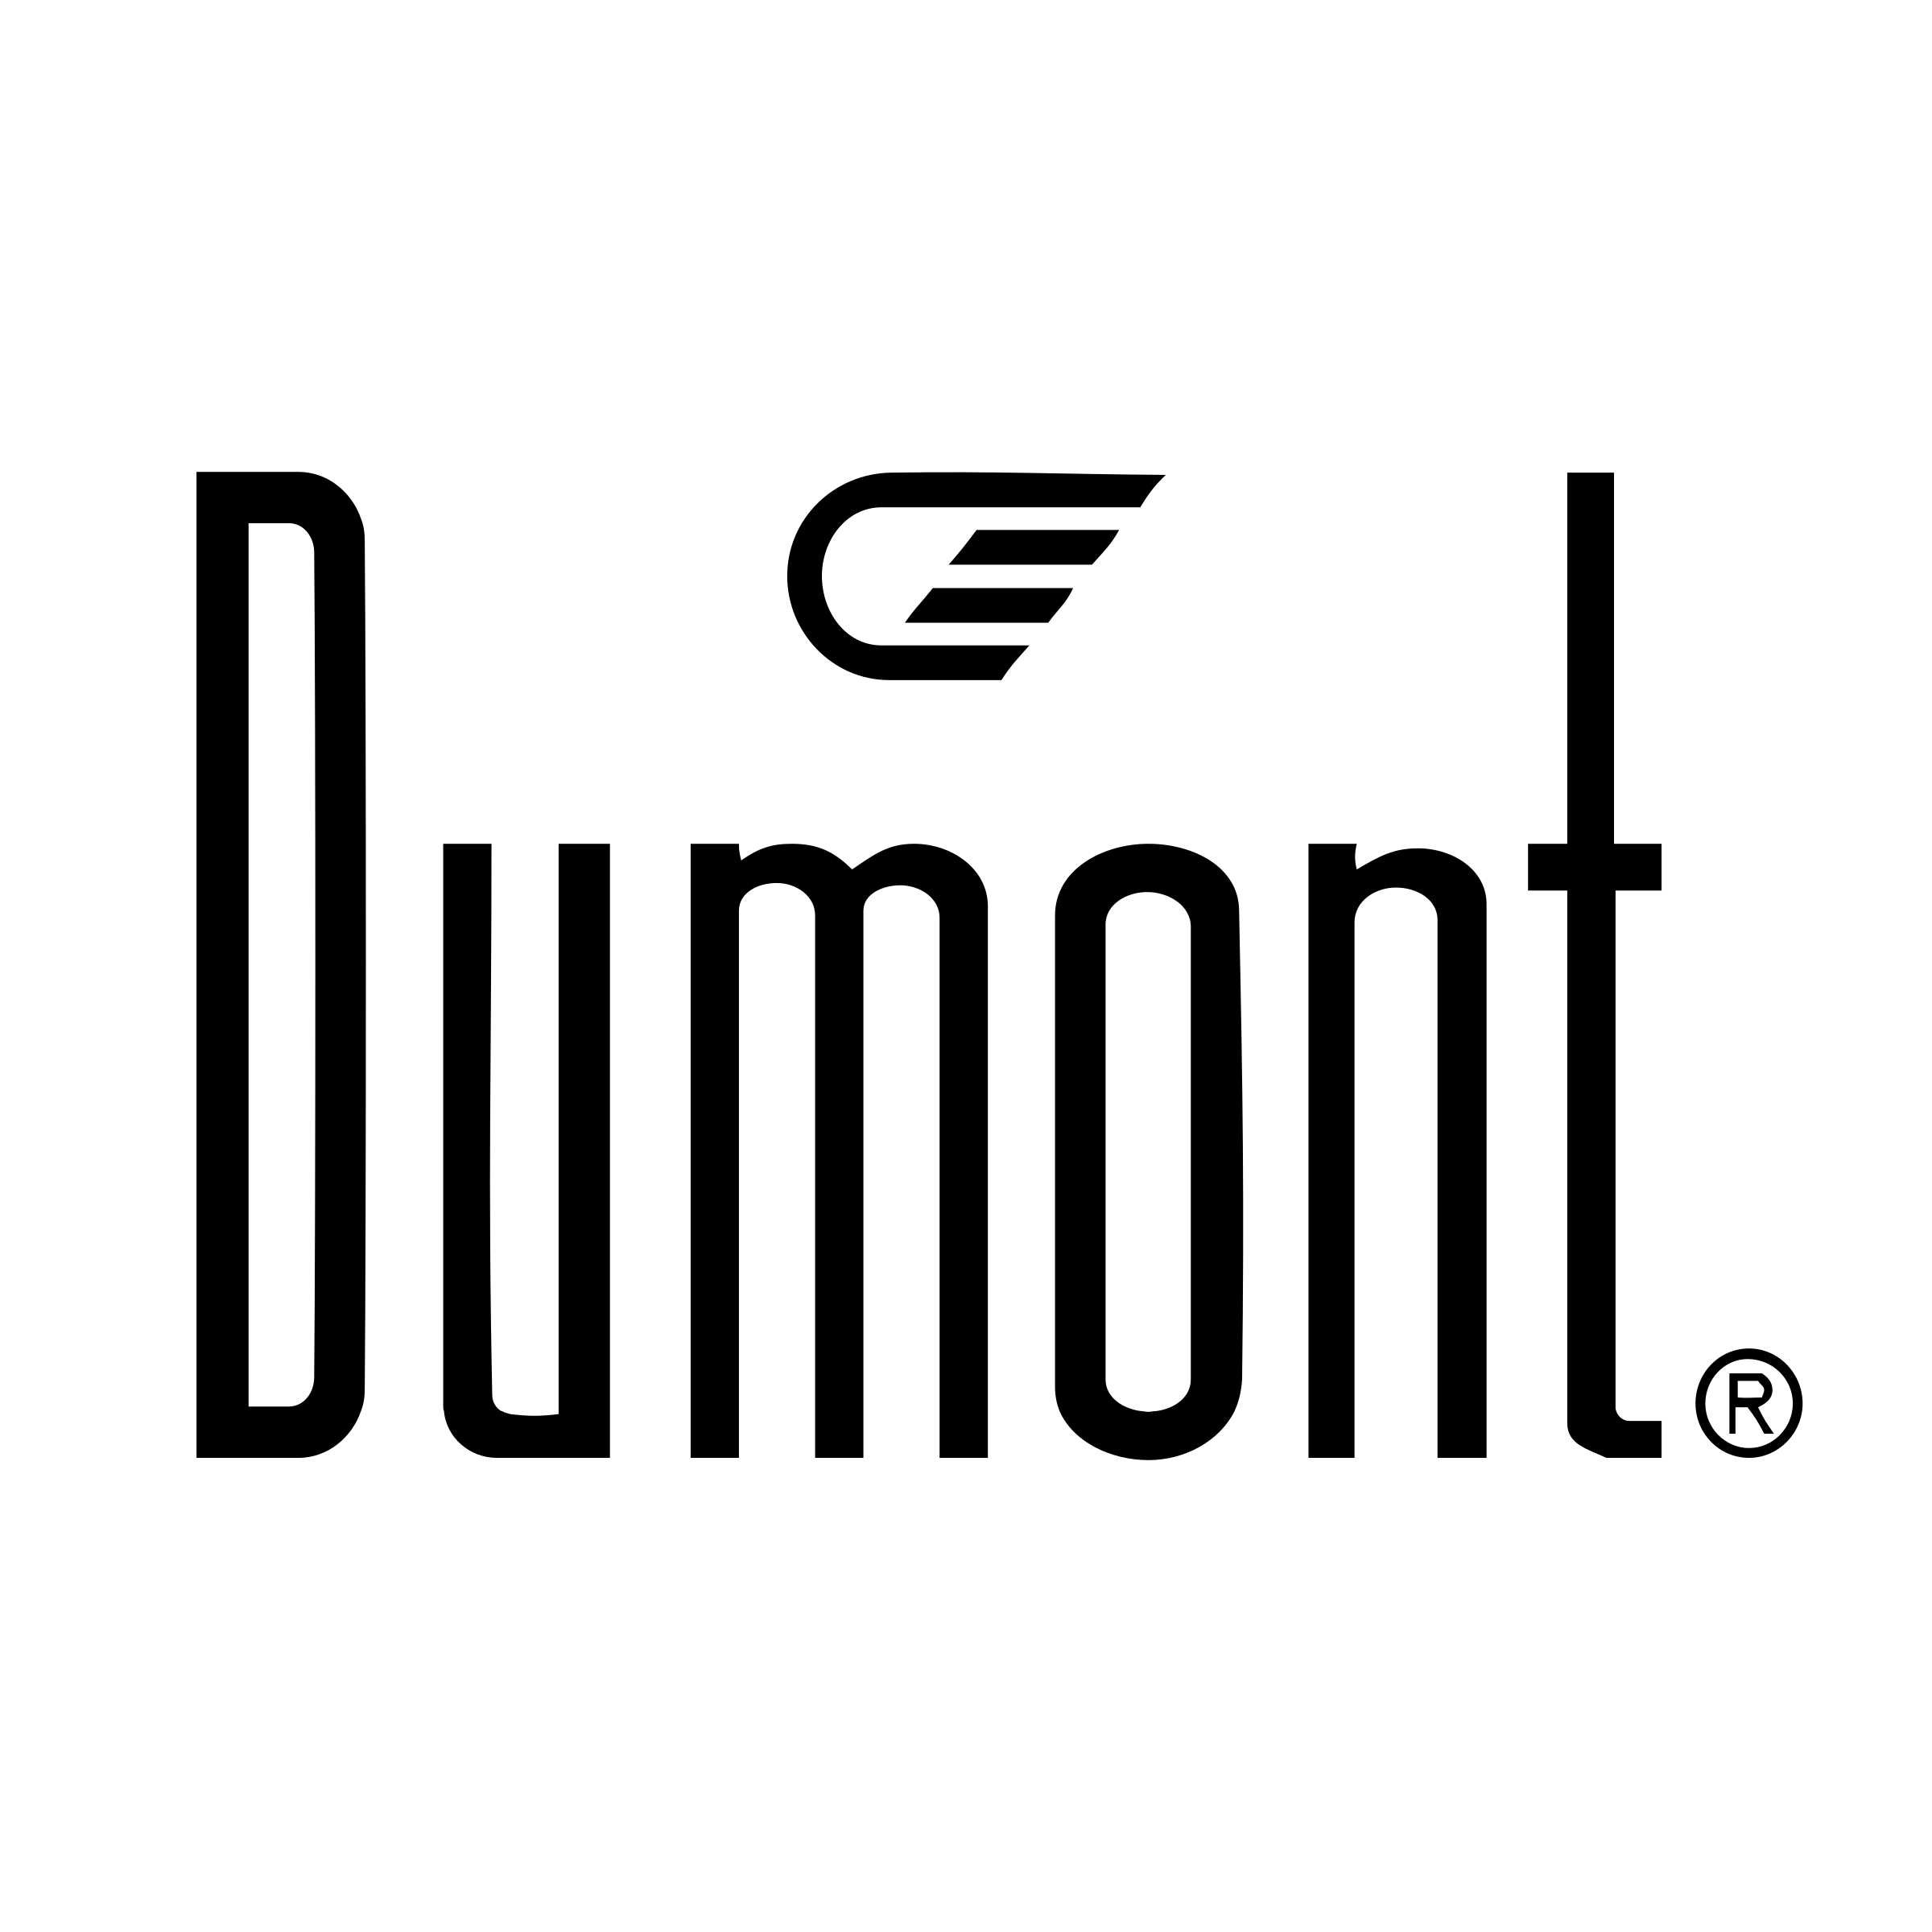 Dumont Logo - Dumont Logo PNG Transparent & SVG Vector - Freebie Supply